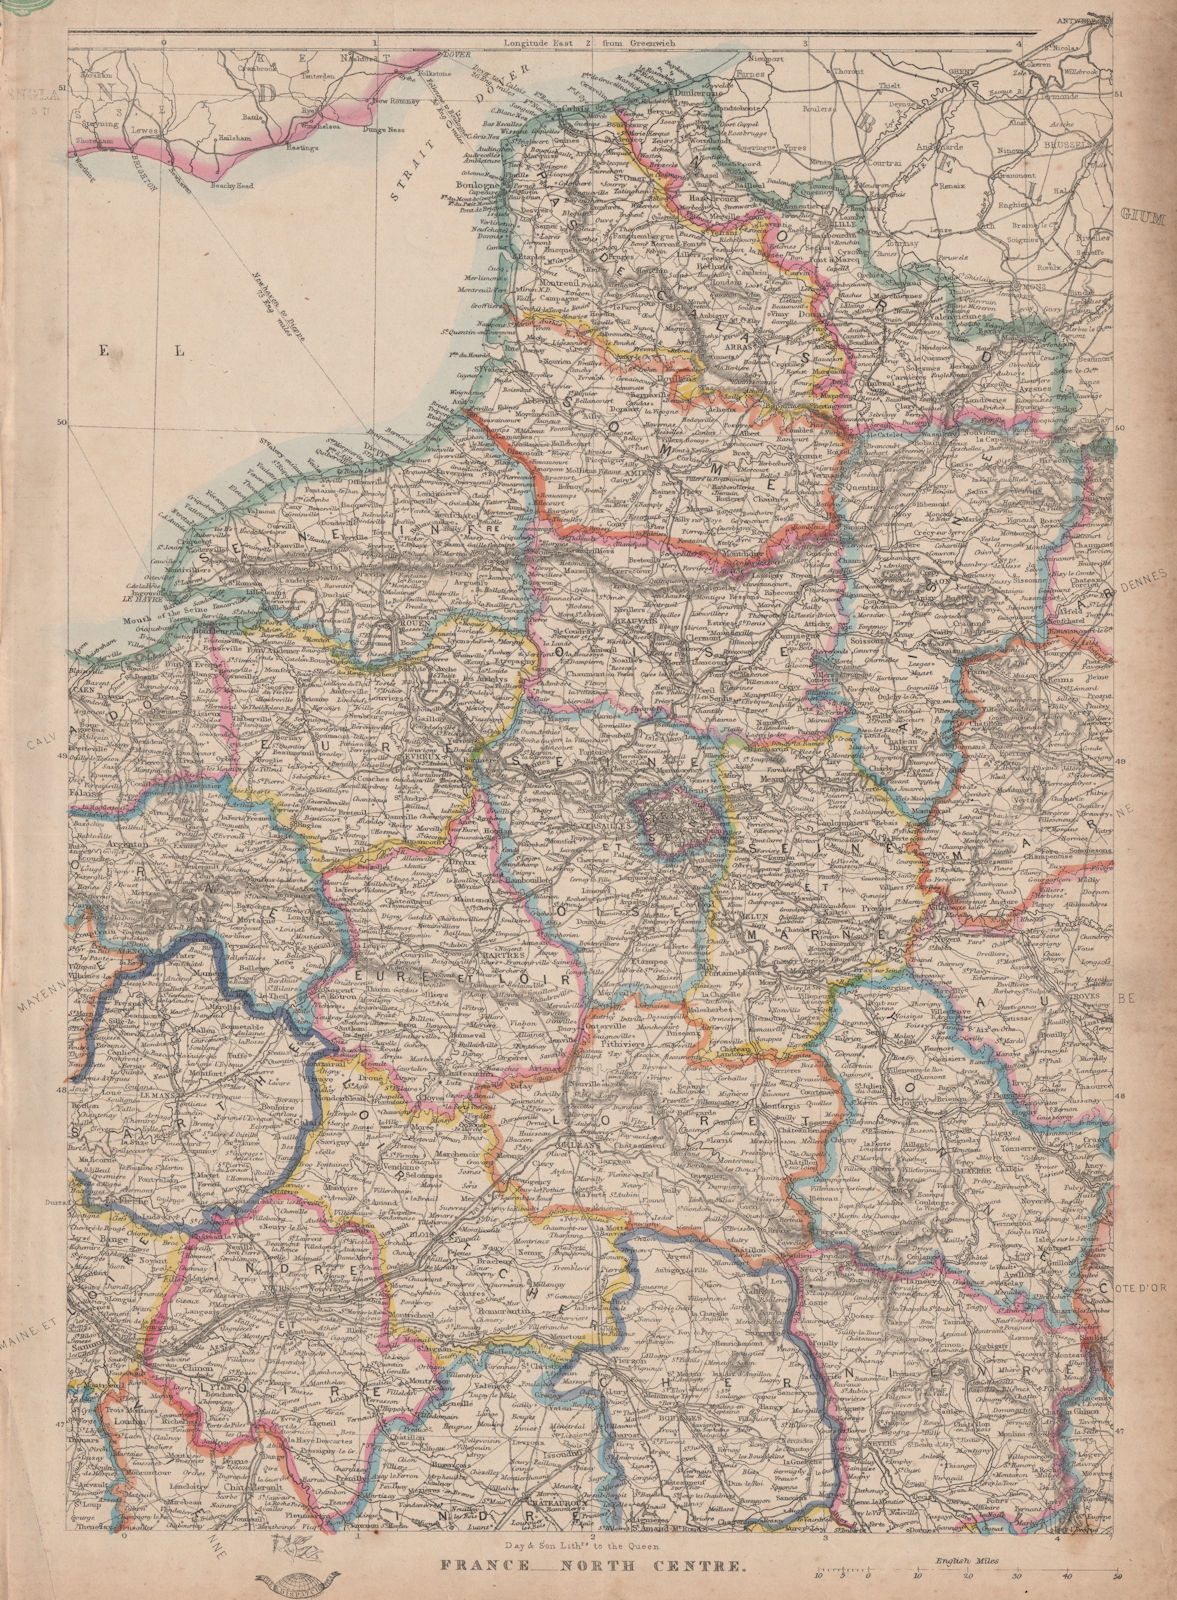 Associate Product FRANCE NORTH CENTRE. Picardy Normandy Ile de France Bourgogne.JW LOWRY 1863 map